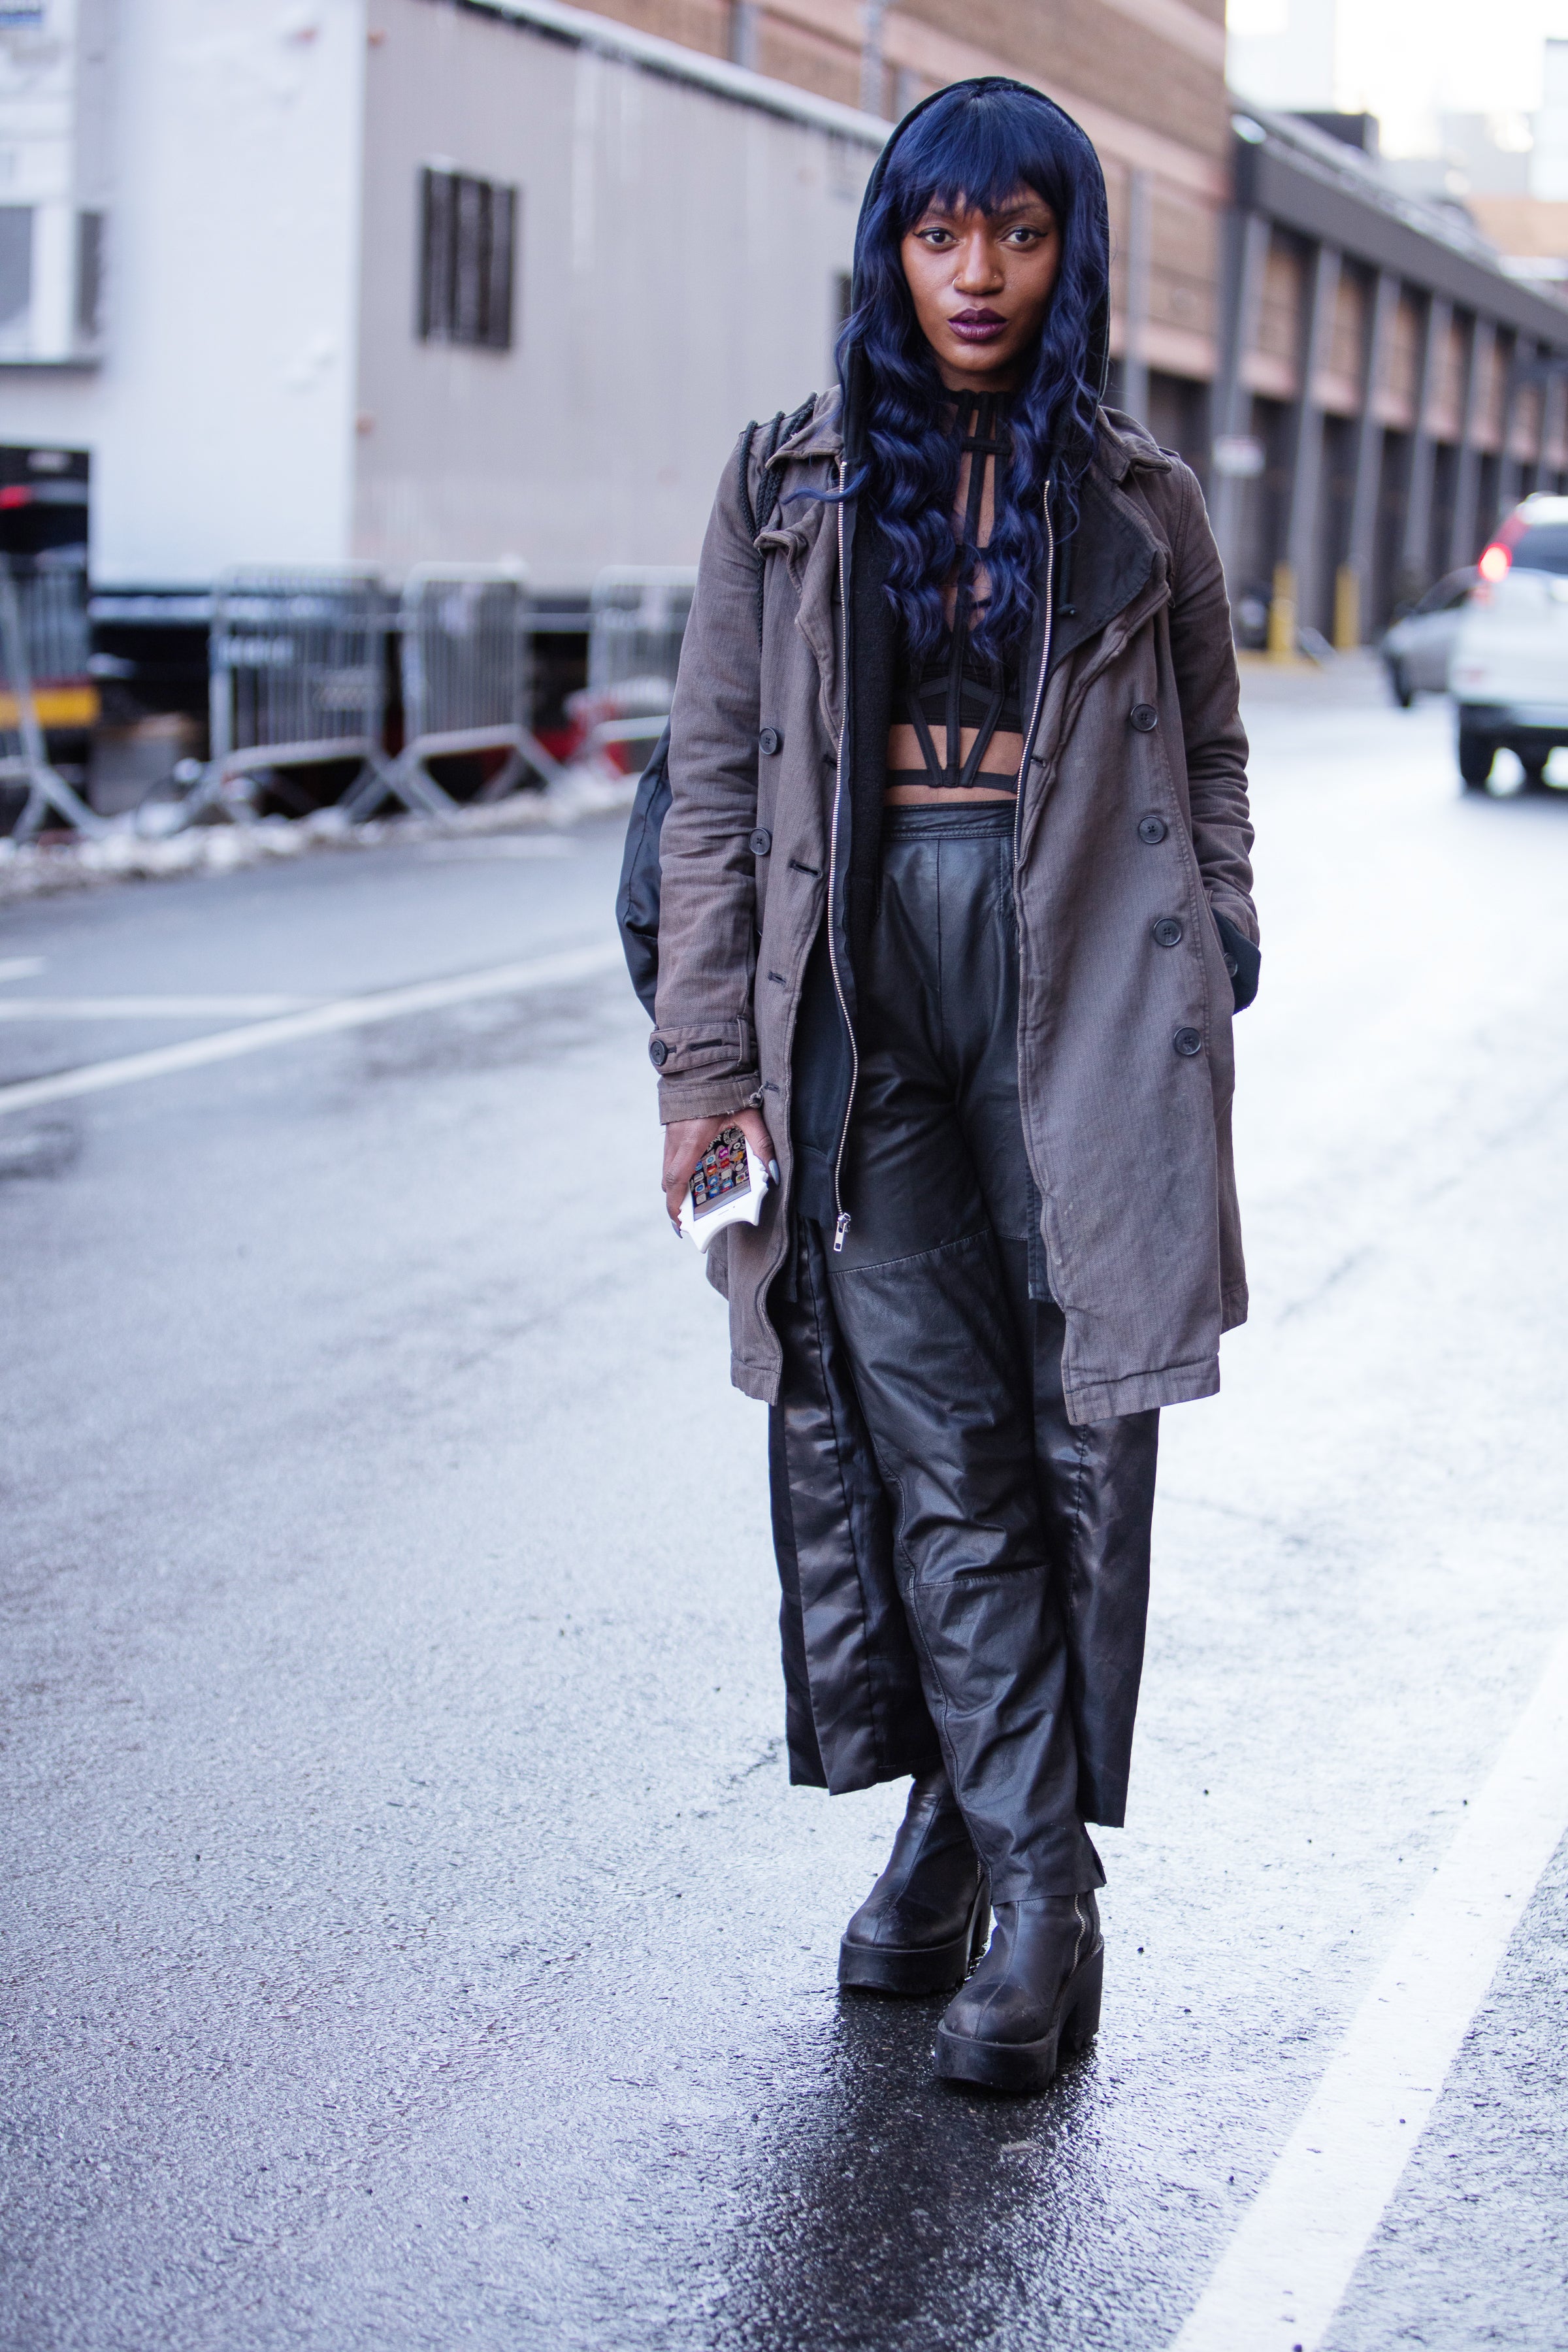 Best Street Style From New York Fashion Week - Essence